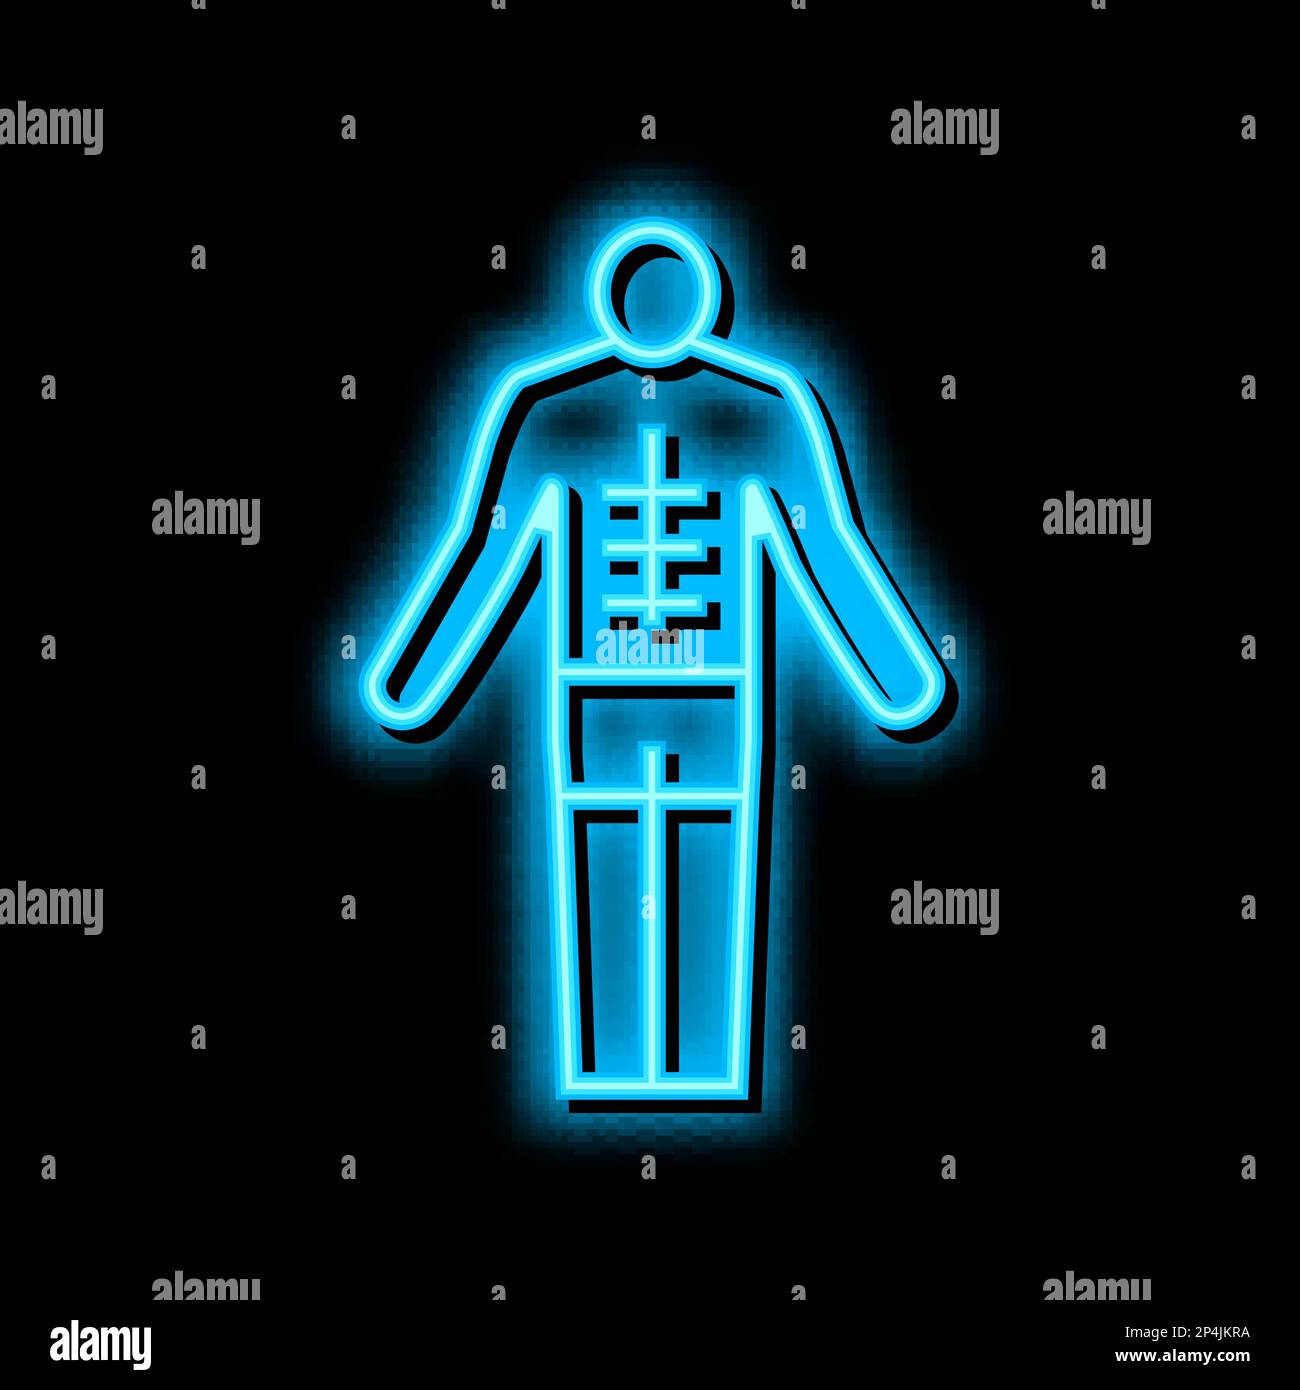 tanned man neon glow icon illustration Stock Vector